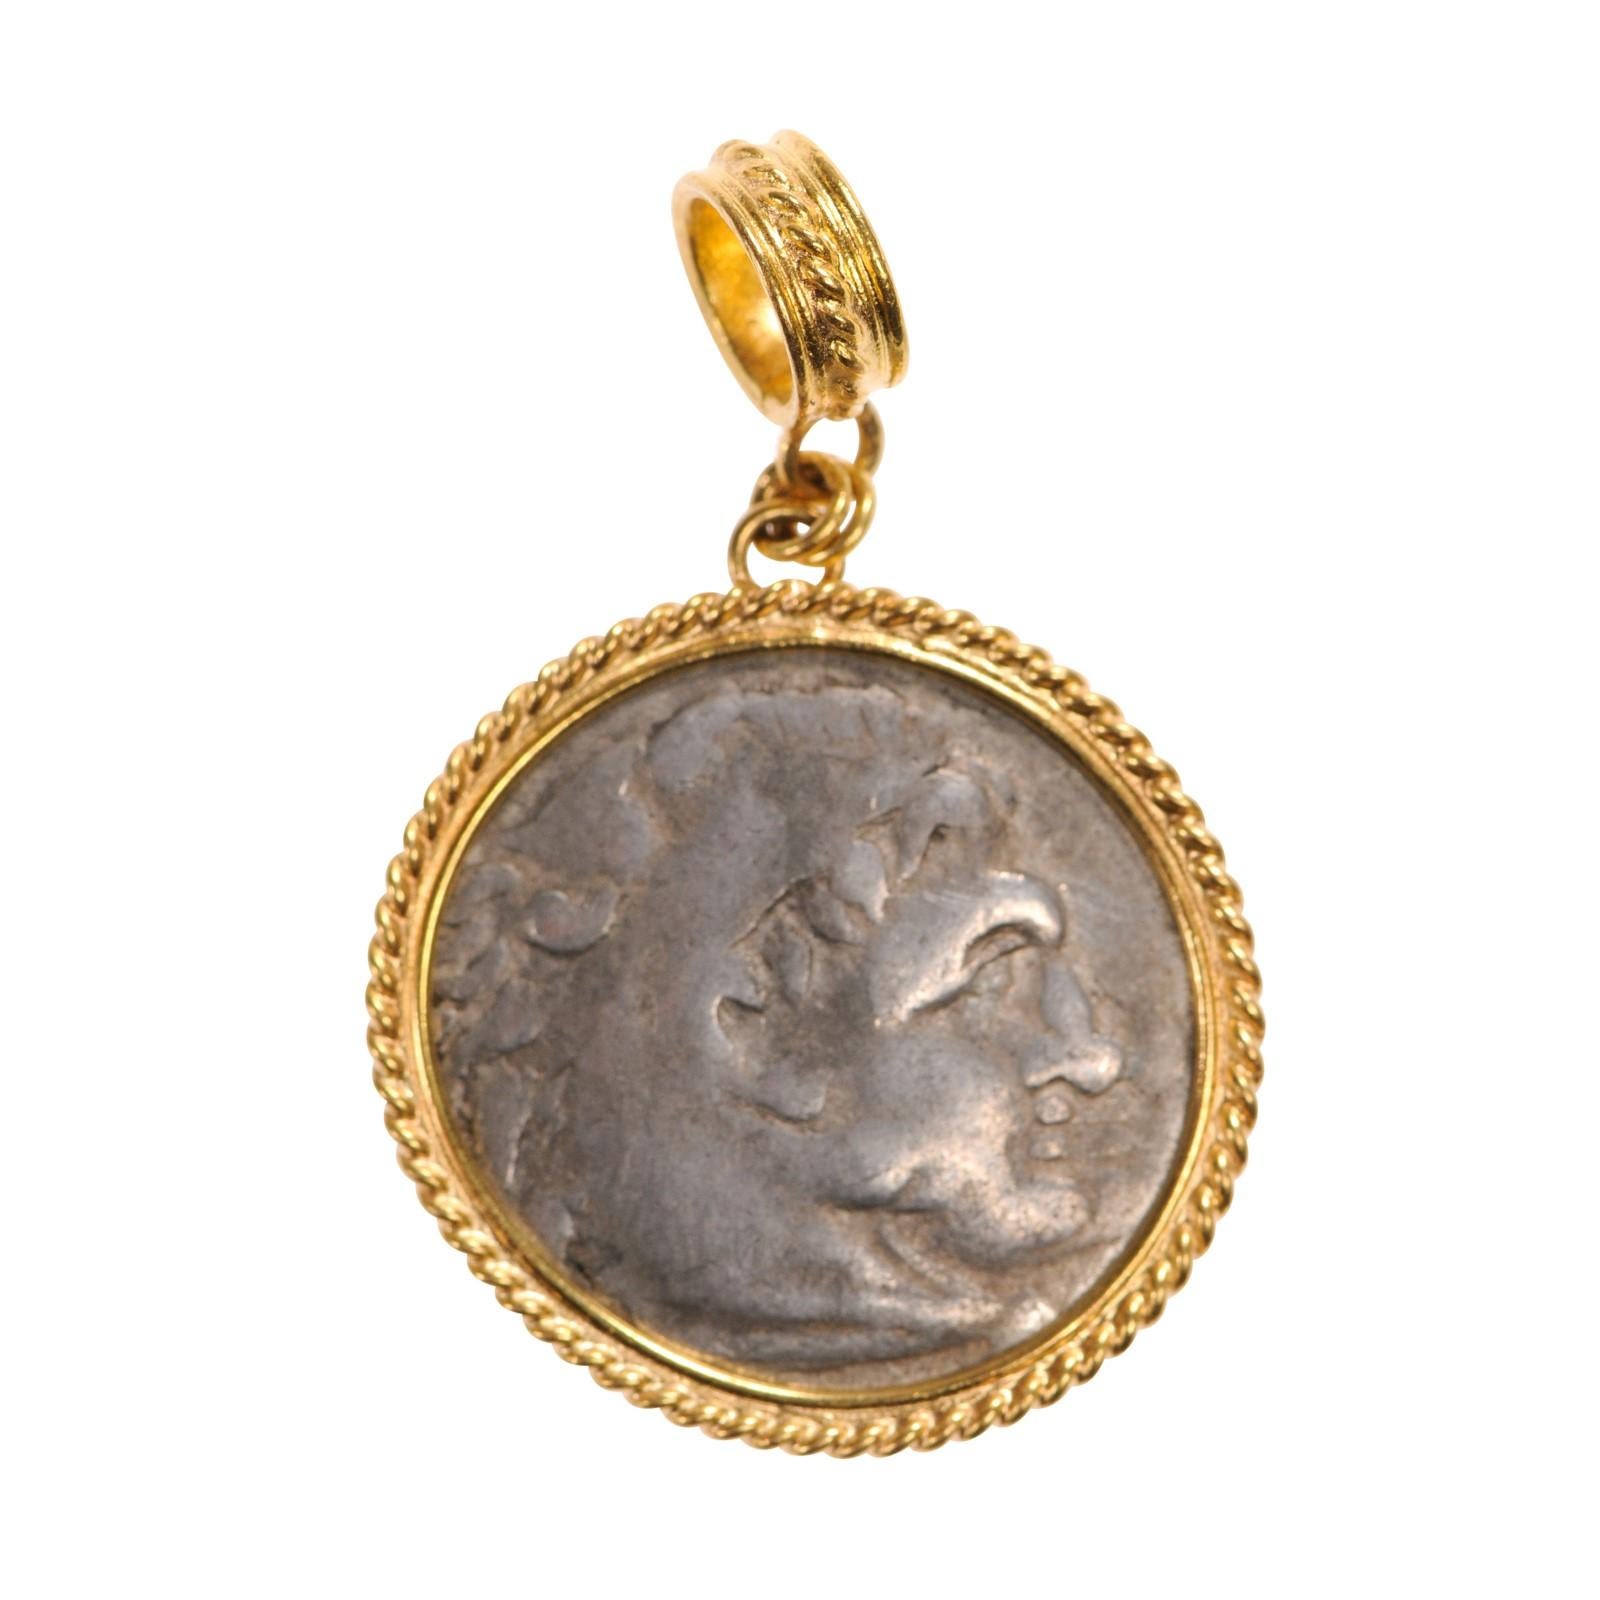 An Authentic Greek Coin of Alexander Tetradrachm, 336 - 323 BC, set in a 22k Gold Bezel. 